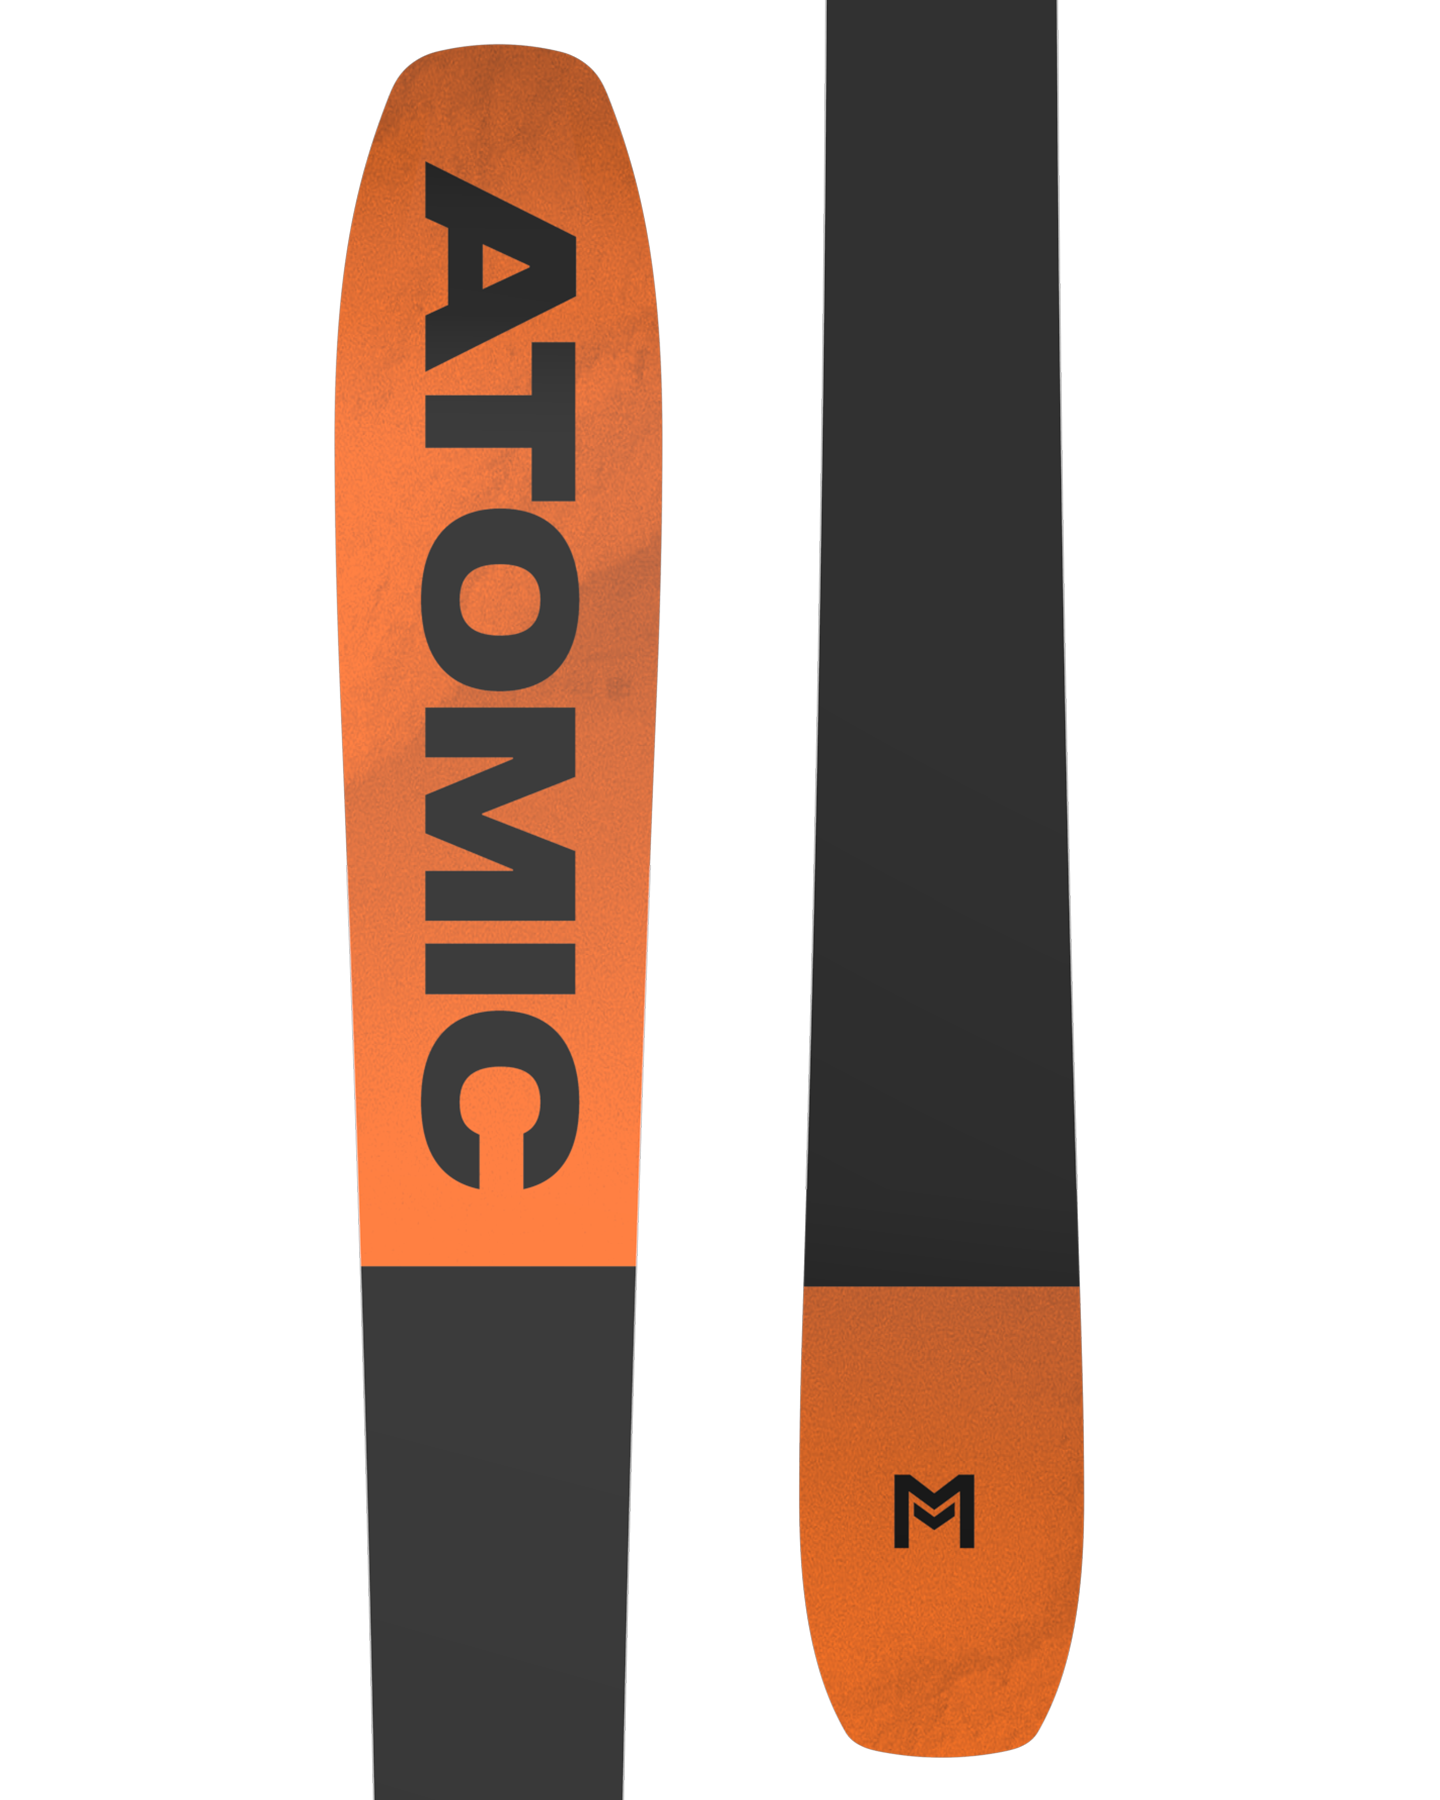 Atomic Maverick 88 Ti Snow Skis - Silver/Black - 2025 Men's Snow Skis - SnowSkiersWarehouse